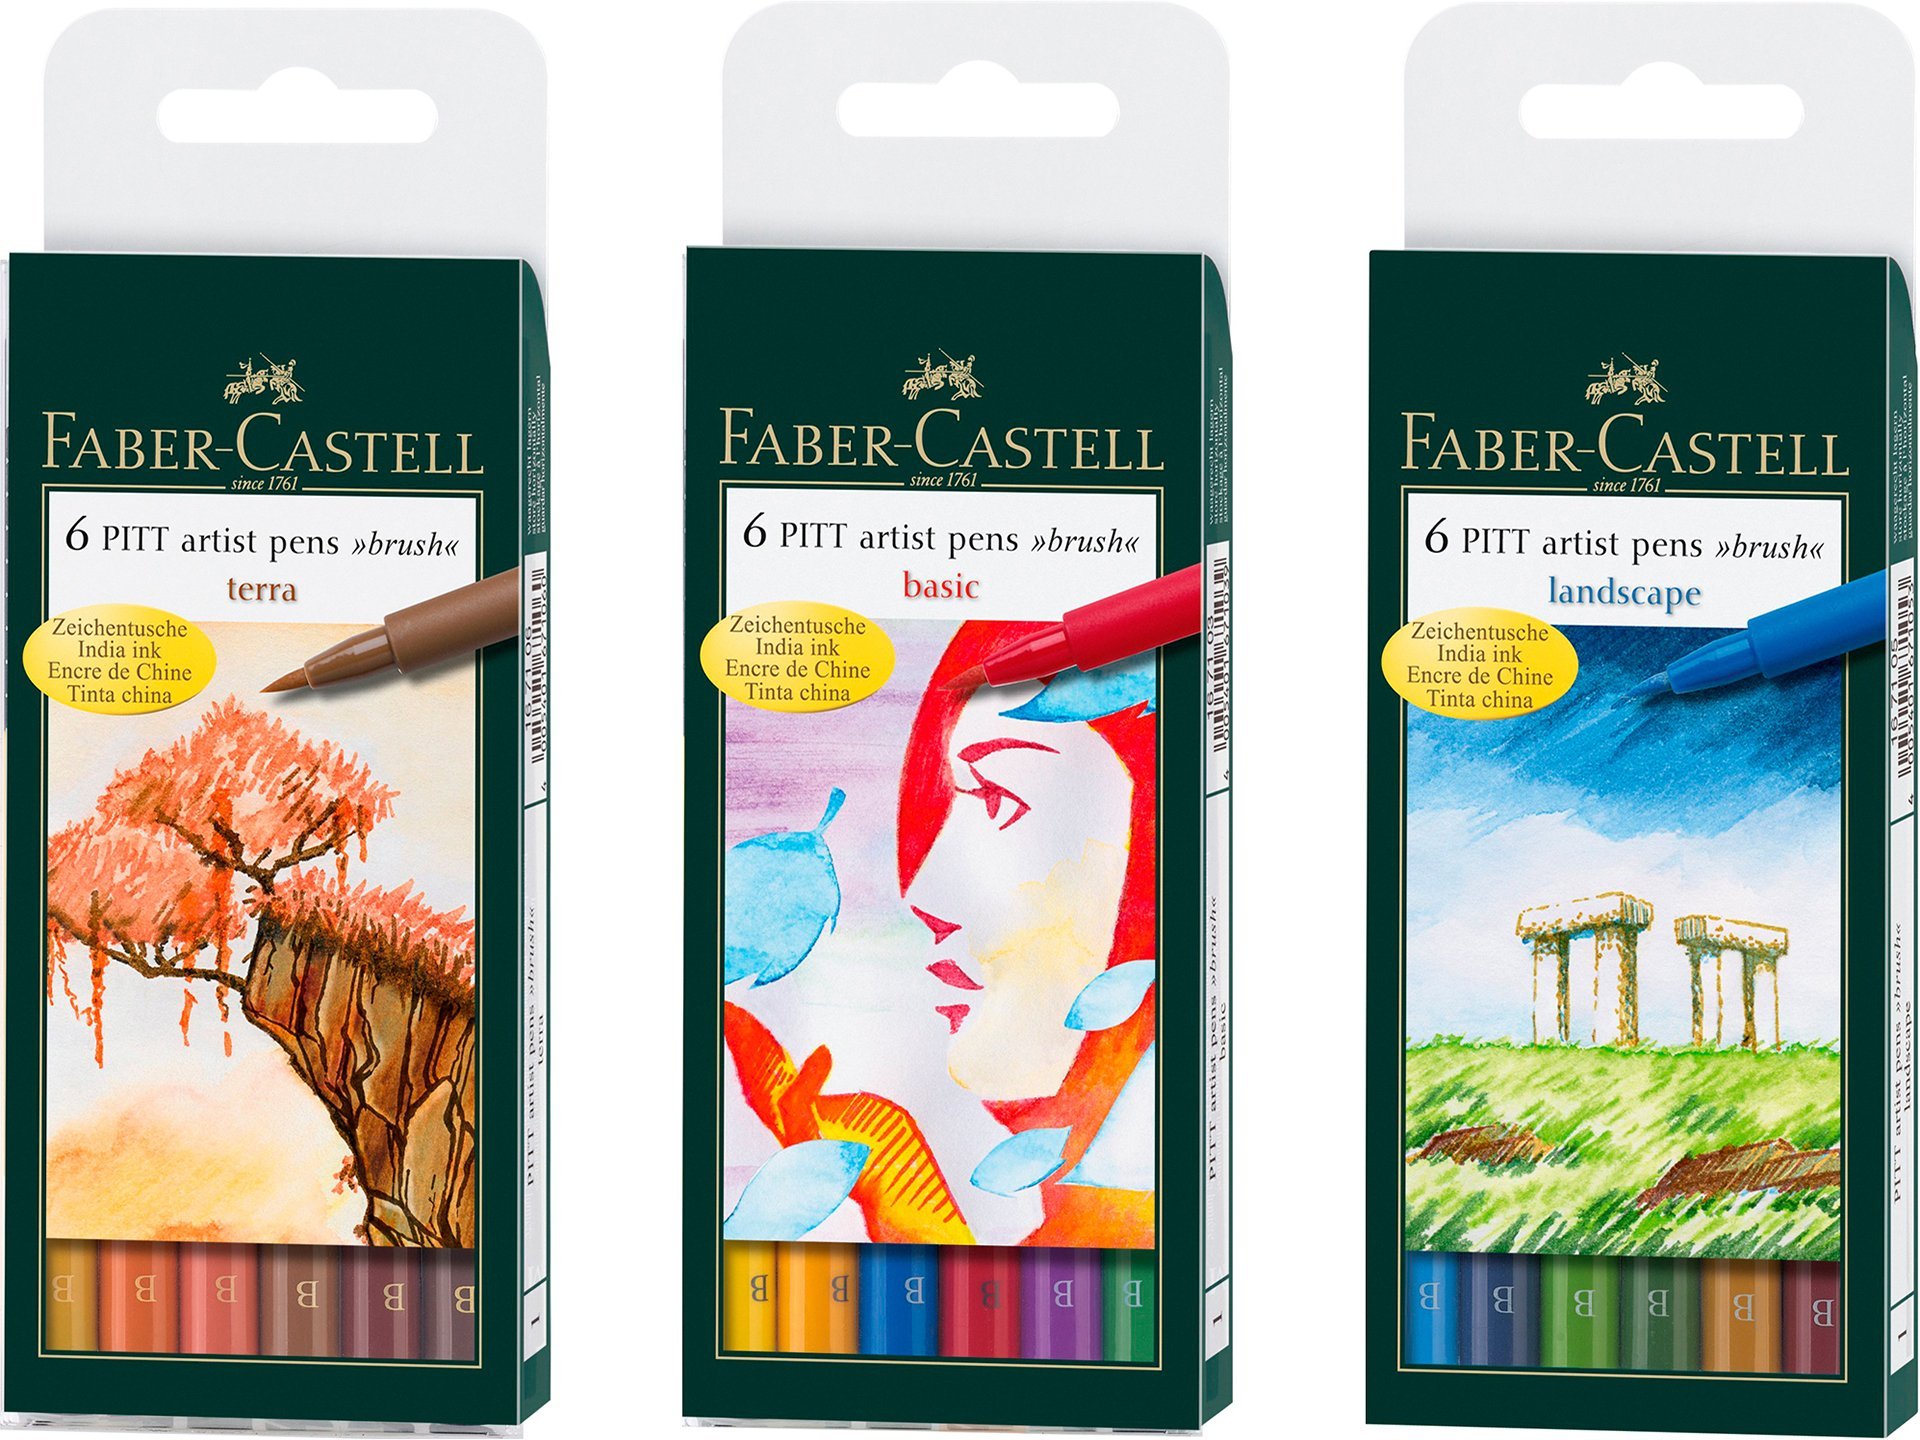 Groenteboer beloning Reis Buy Faber-Castell Pitt artist pen, brush, coloured online at Modulor